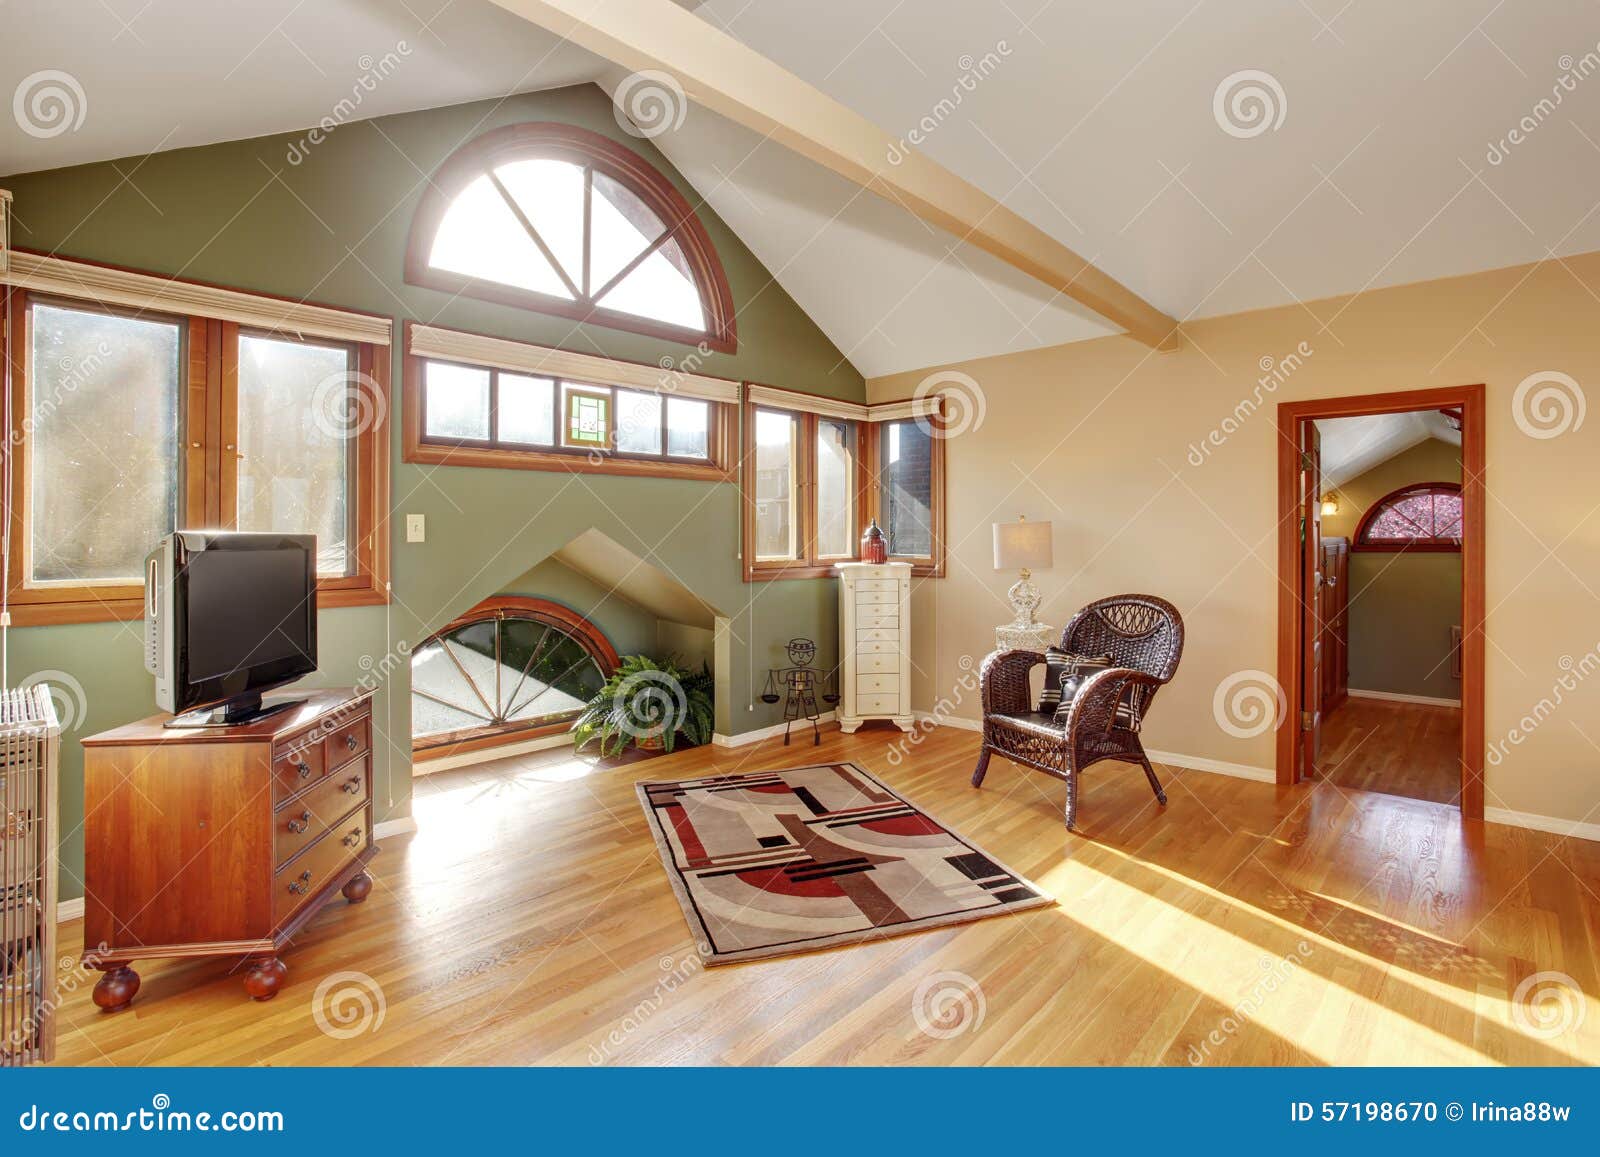 Vintage Loft Style Bedroom With Tv And Hardwood Floor Stock